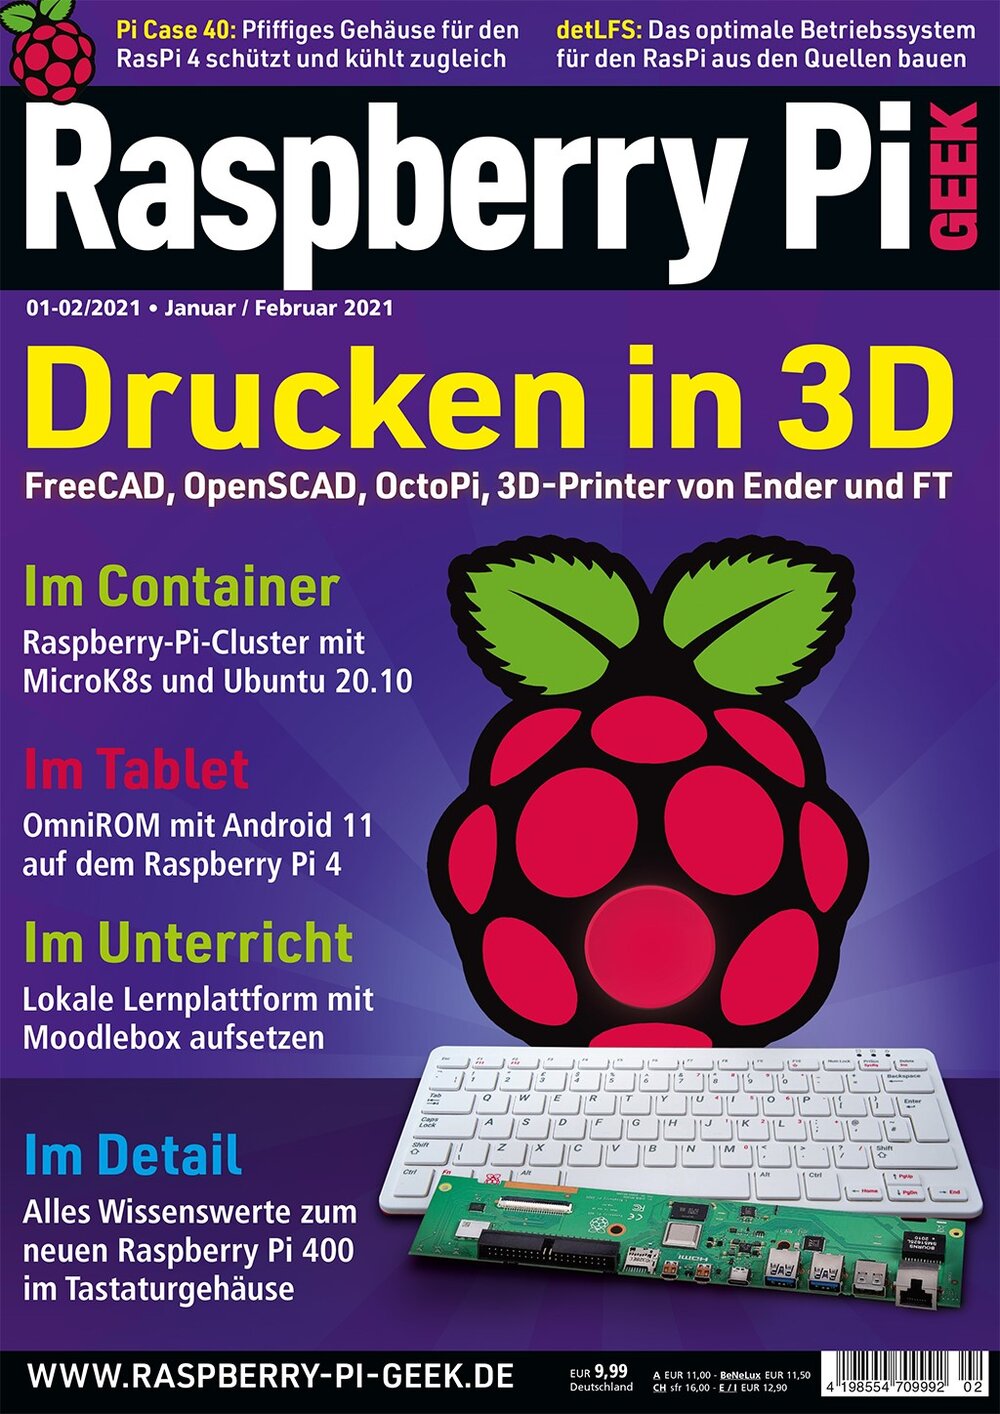 Raspberry Pi Geek ePaper 02/2021